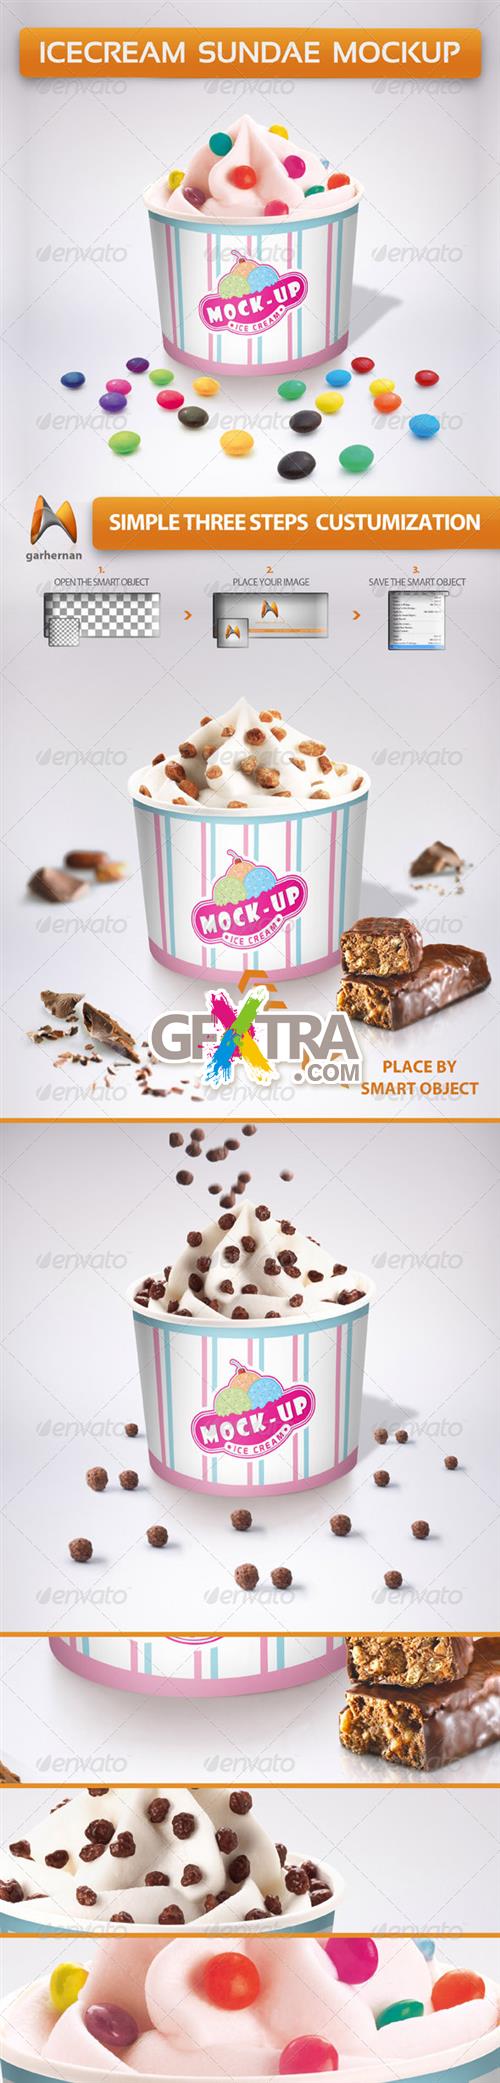 GraphicRiver - Ice Cream Sundae Mockup 5371811